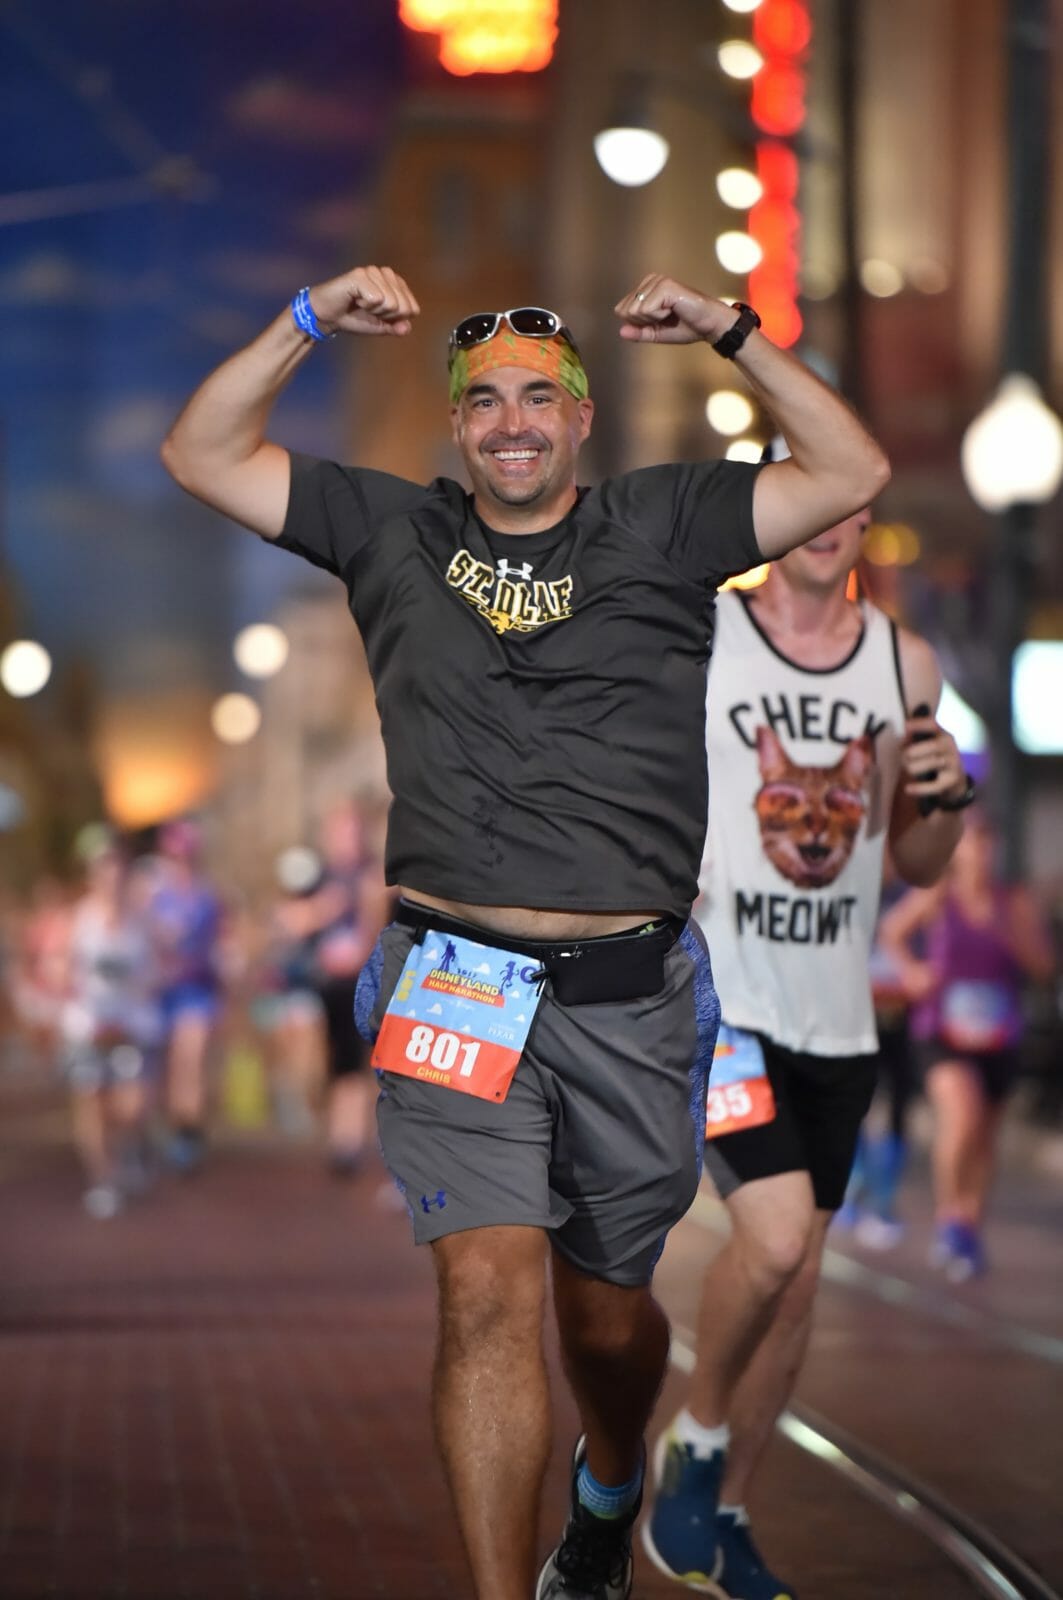 Chris running Disneyland Half Marathon, arms raised in triumph